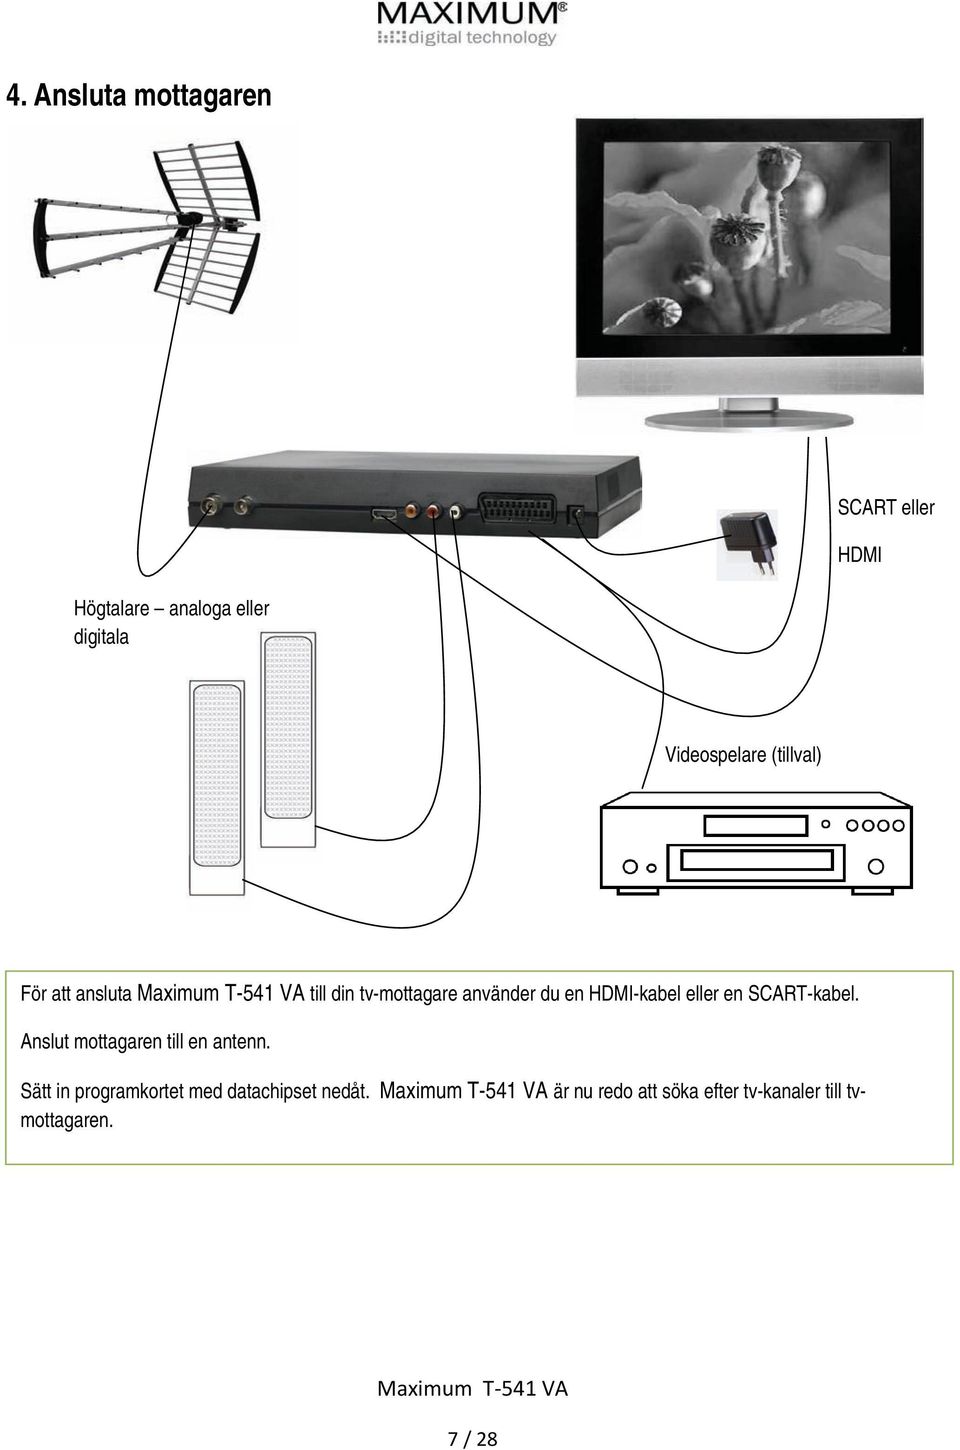 HDMI-kabel eller en SCART-kabel. Anslut mottagaren till en antenn.